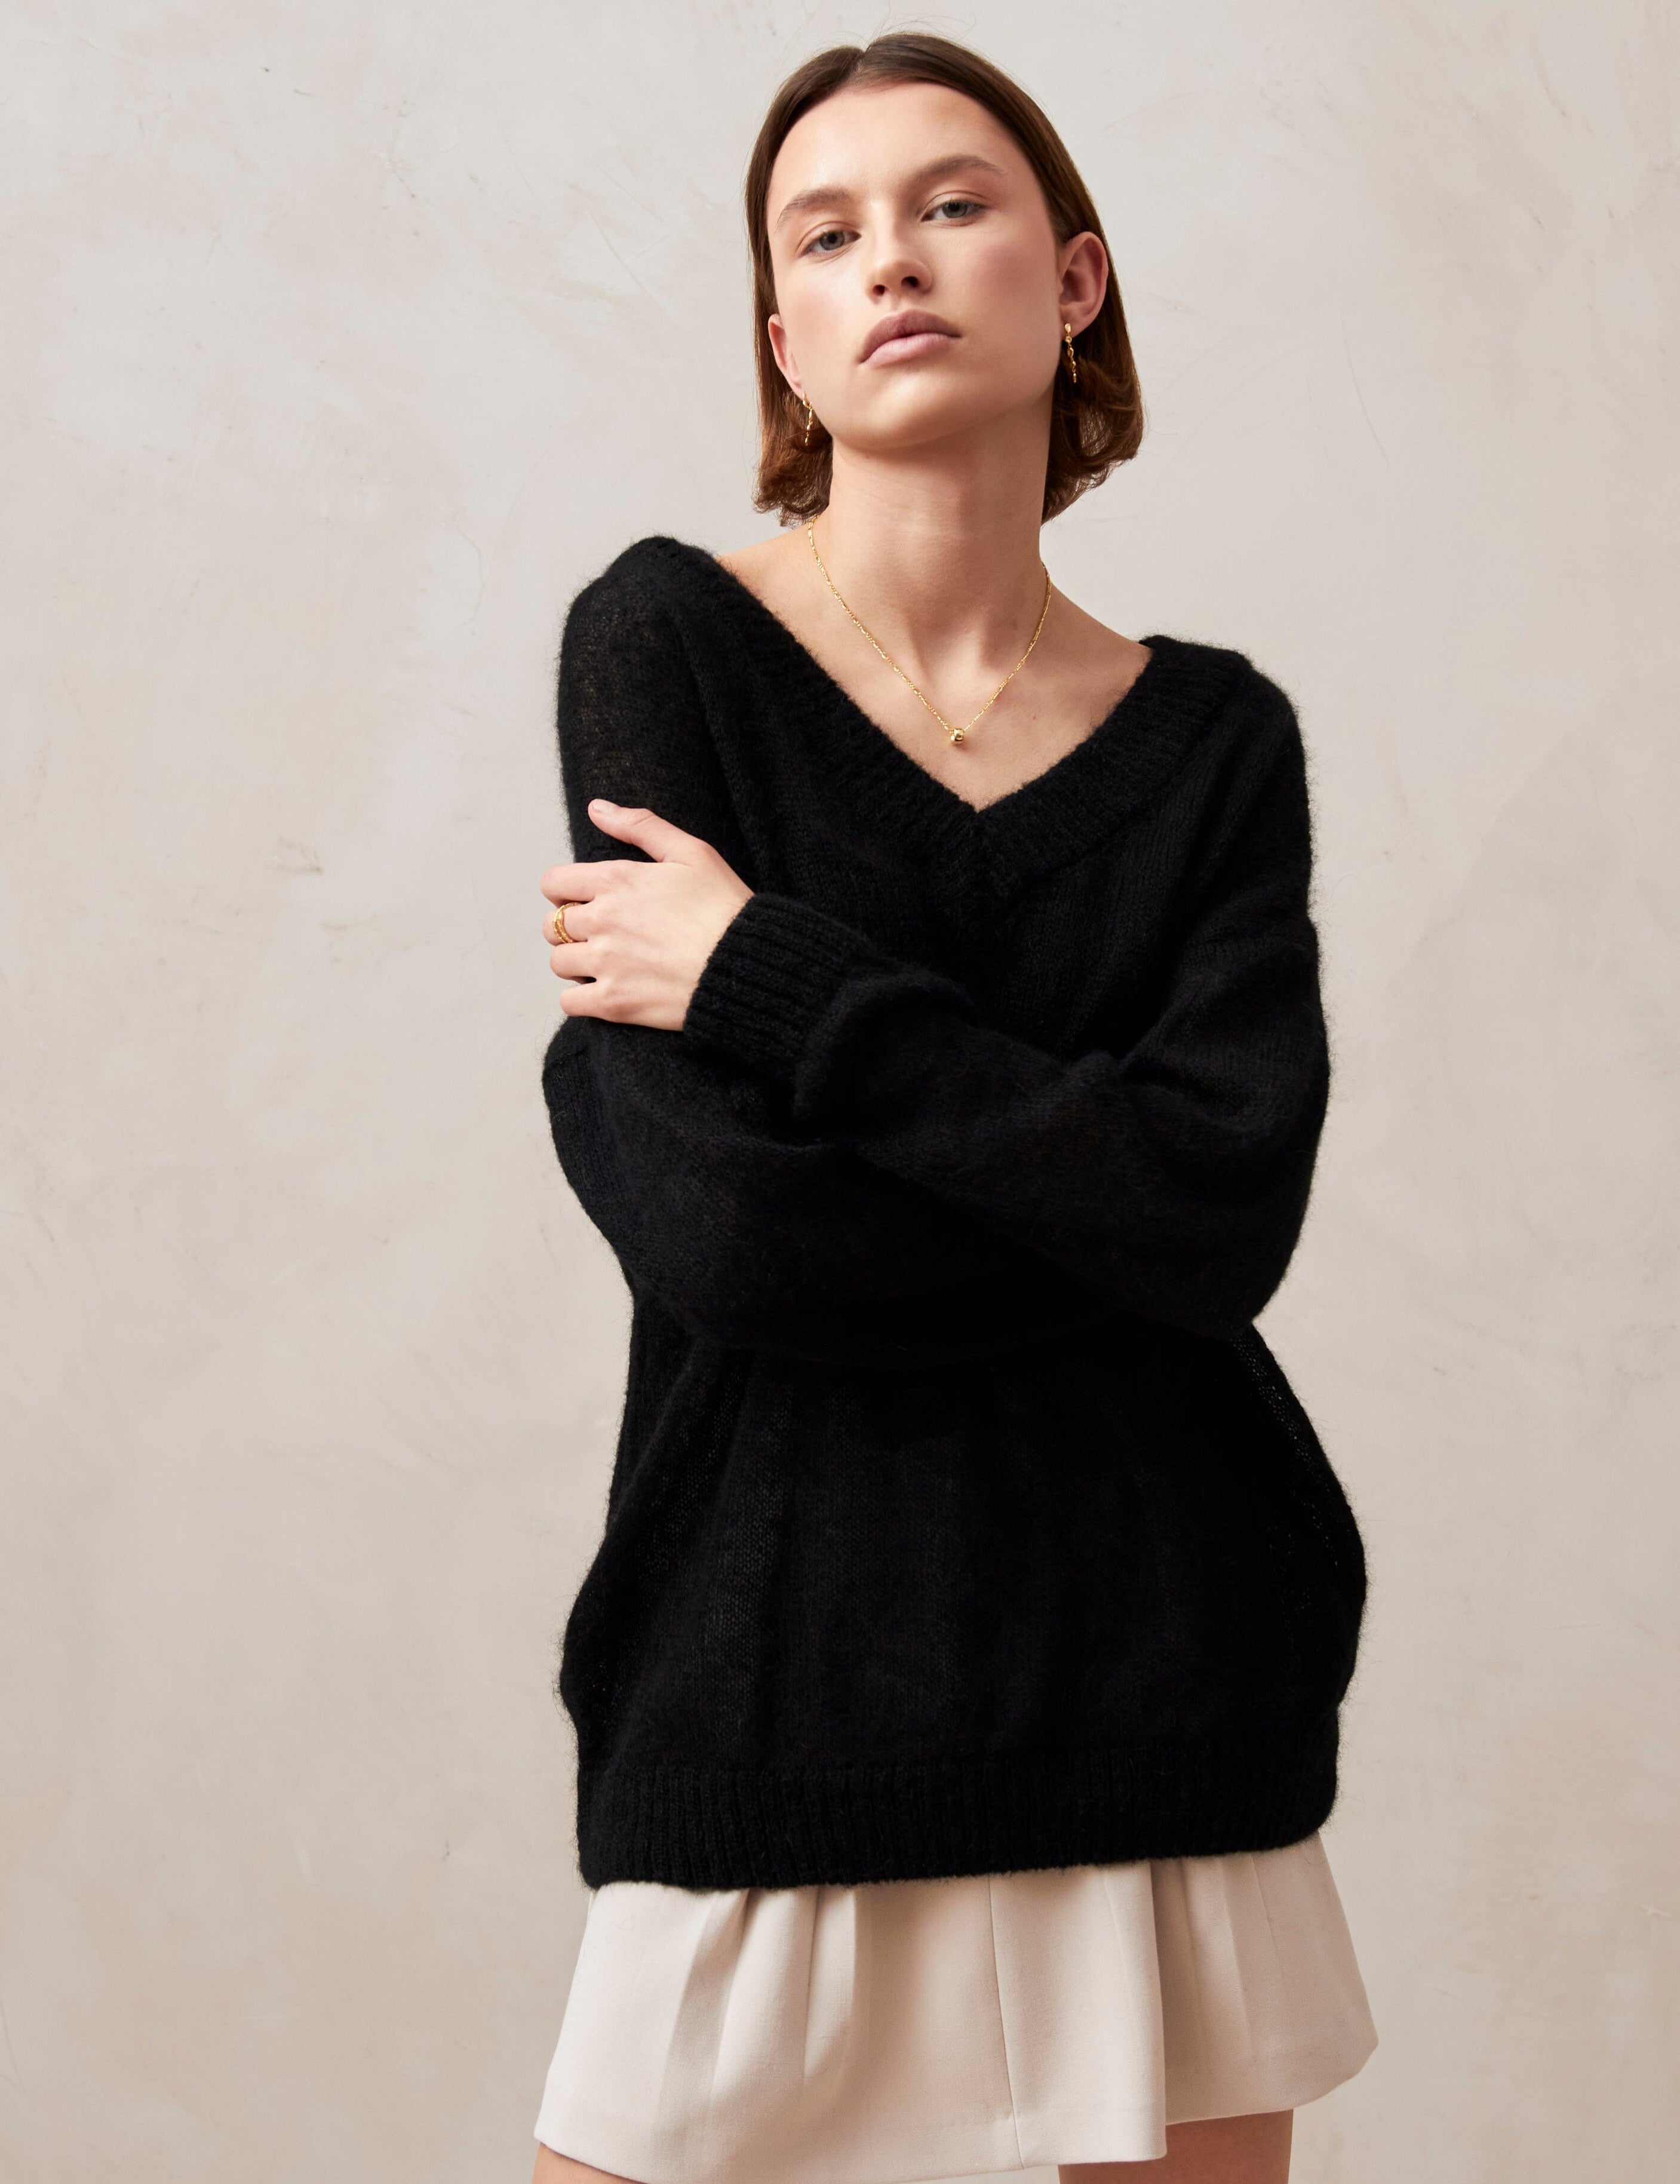 pomeda-black-sweater-sweaters-alohas-228100_3000x_9d074bb5-0fd4-41c1-adef-e2dc3684c66e.jpg